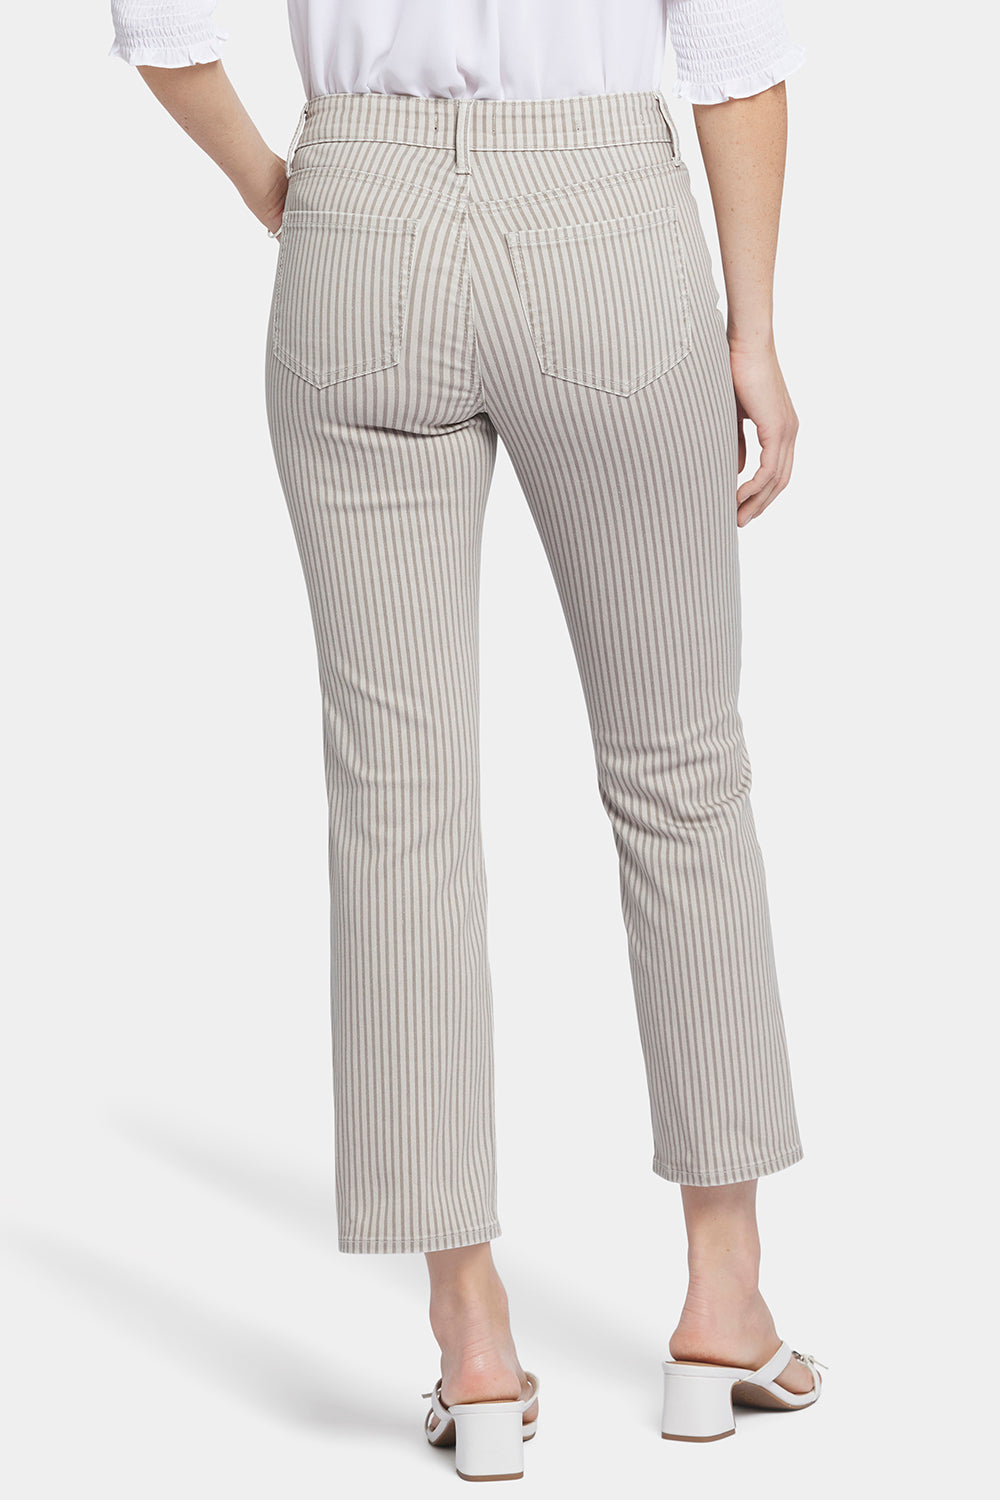 NYDJ Marilyn Straight Ankle Jeans  - Sandbar Stripe